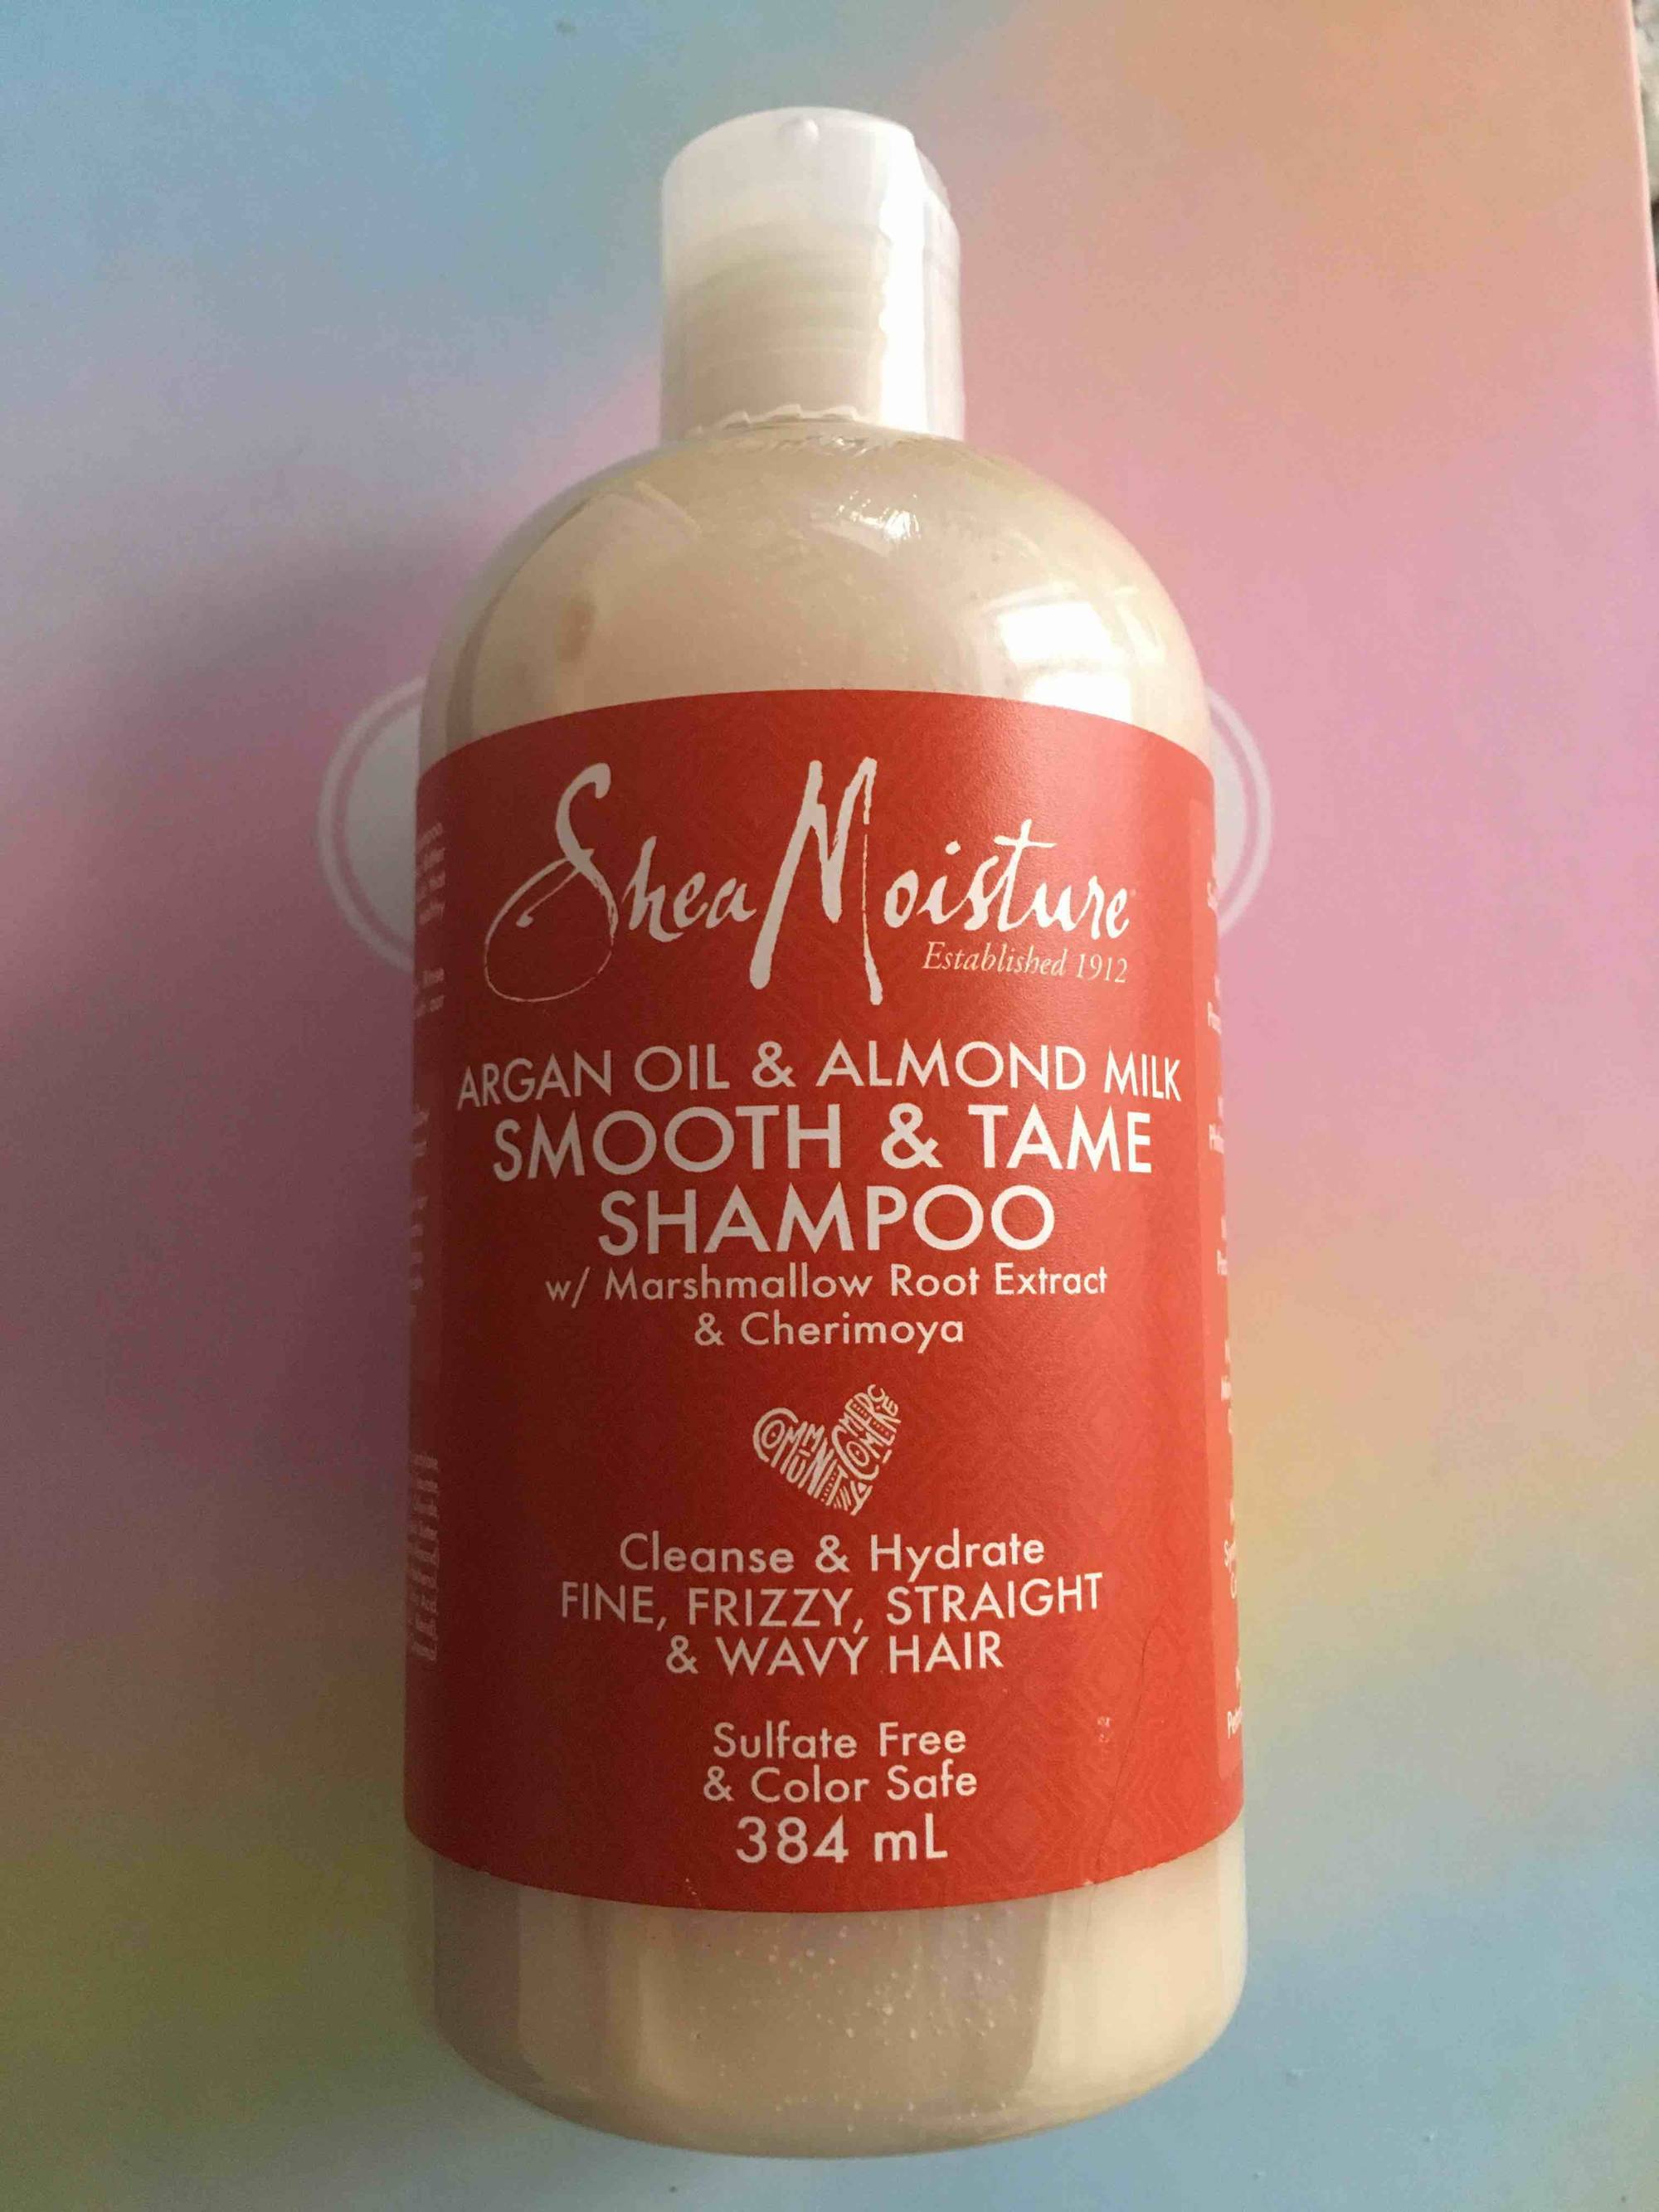 SHEA MOISTURE - Argan oil & almond milk - Smooth & tame shampoo